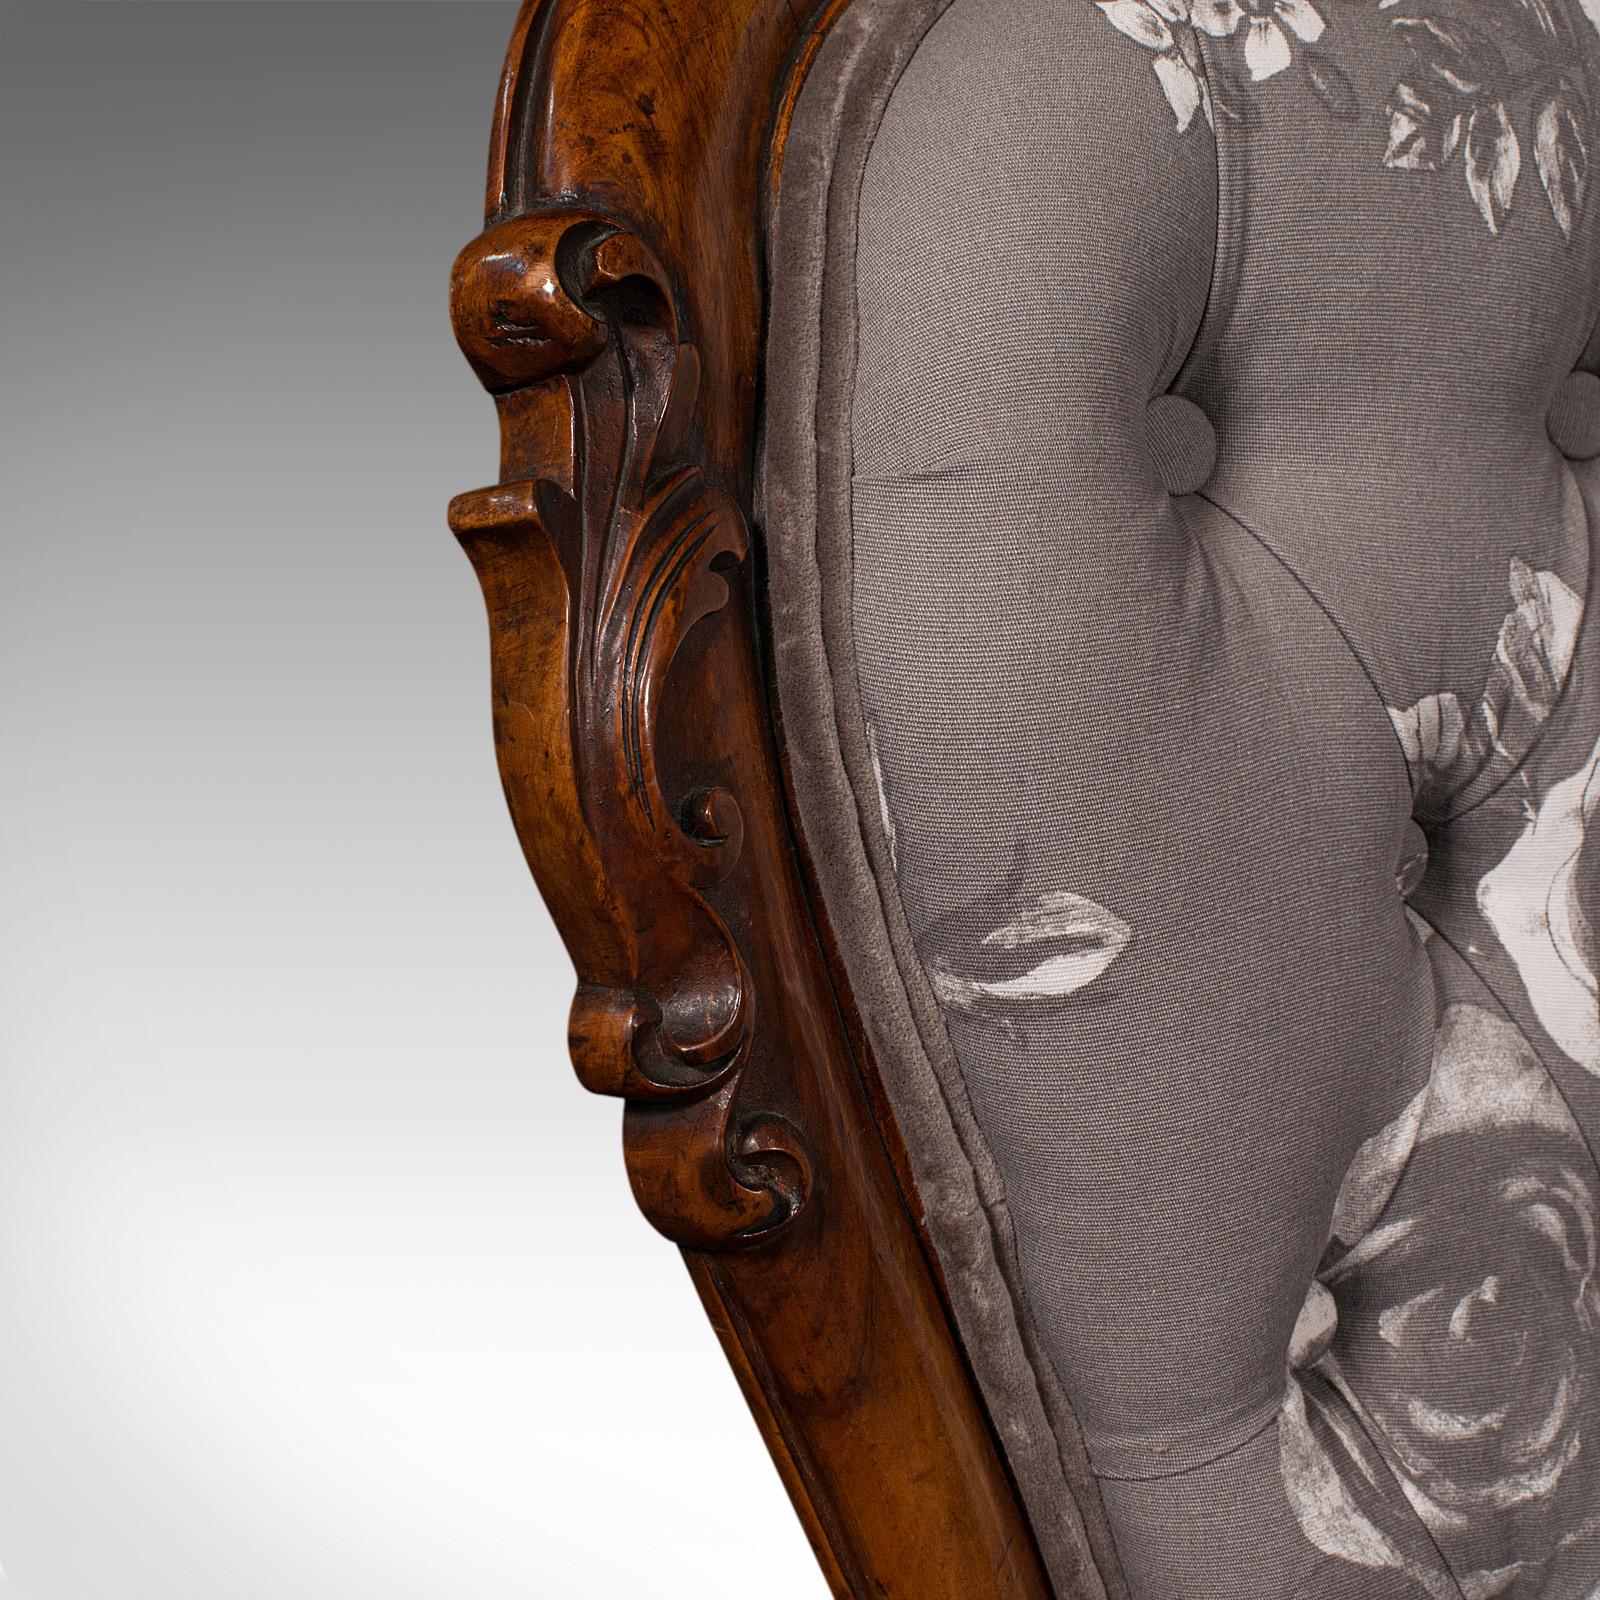 Antique Button Back Salon Chair English Walnut Spoon Seat Victorian circa 1840 For Sale 3